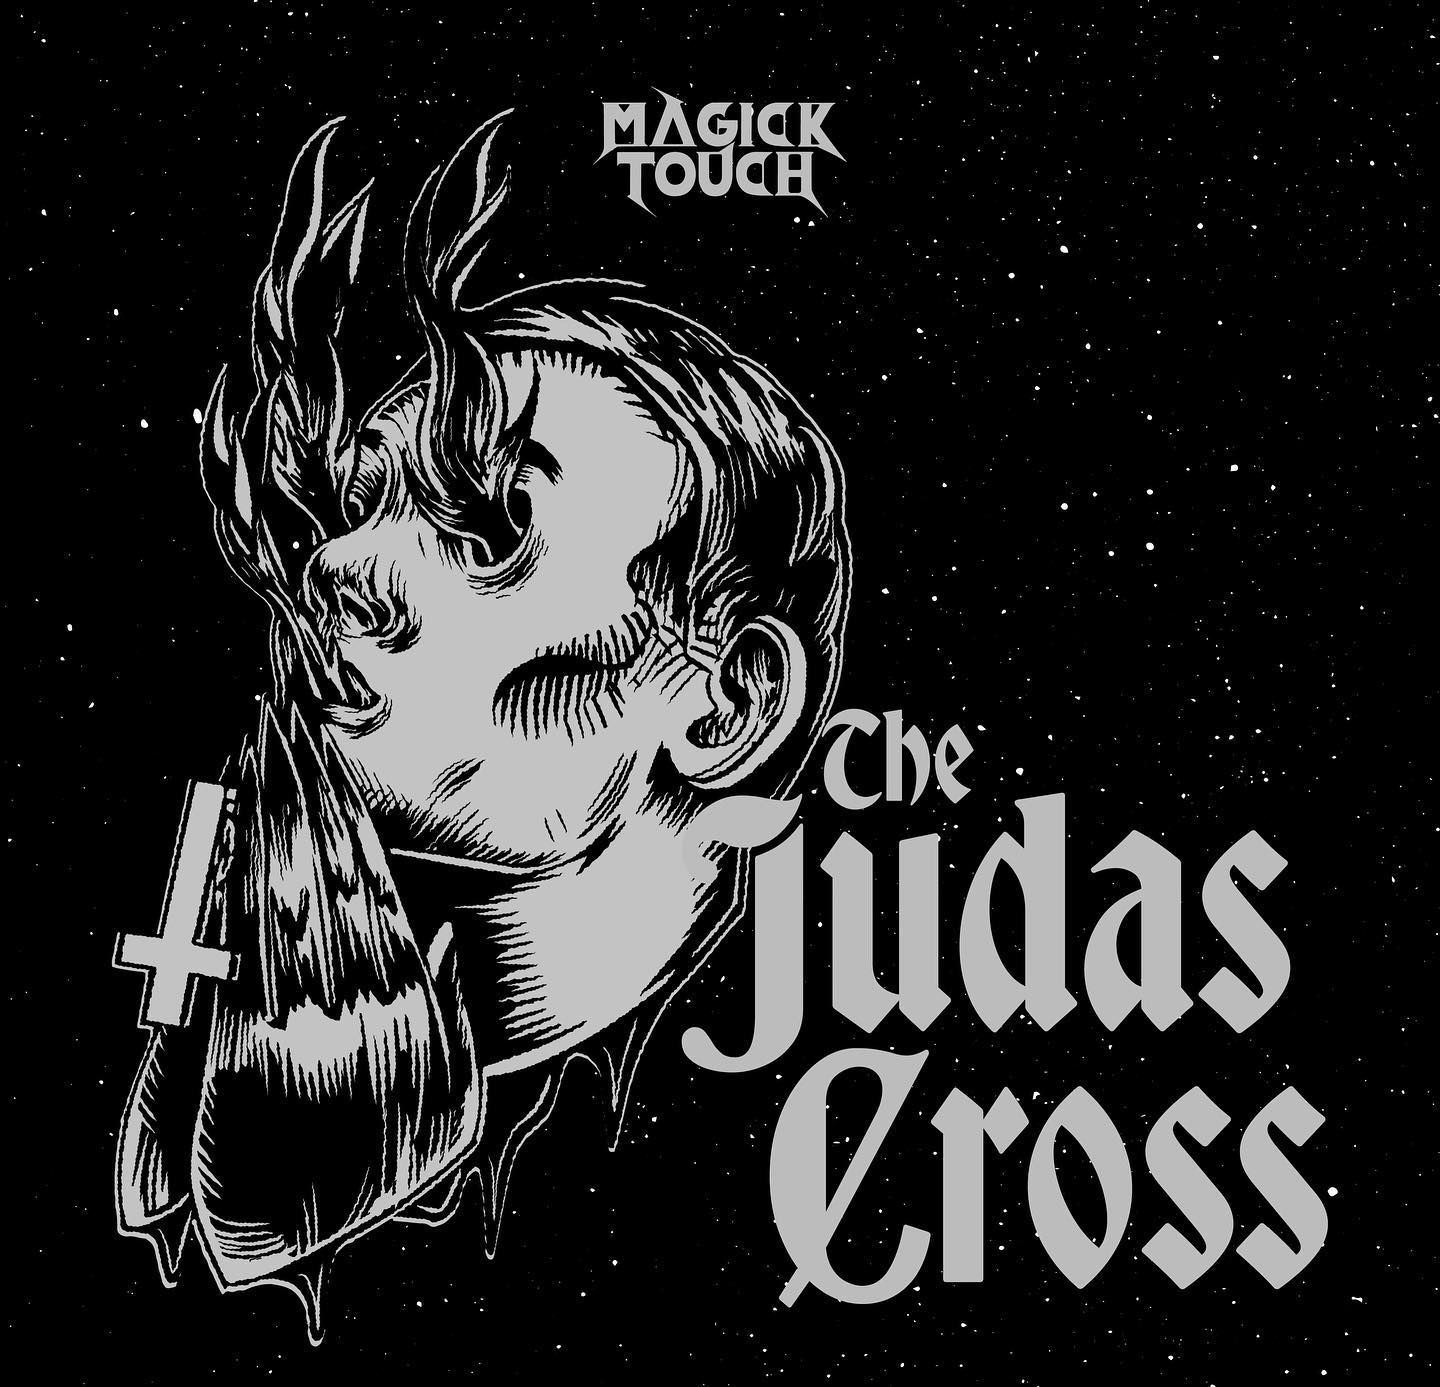 Magick Touch - The Judas Cross